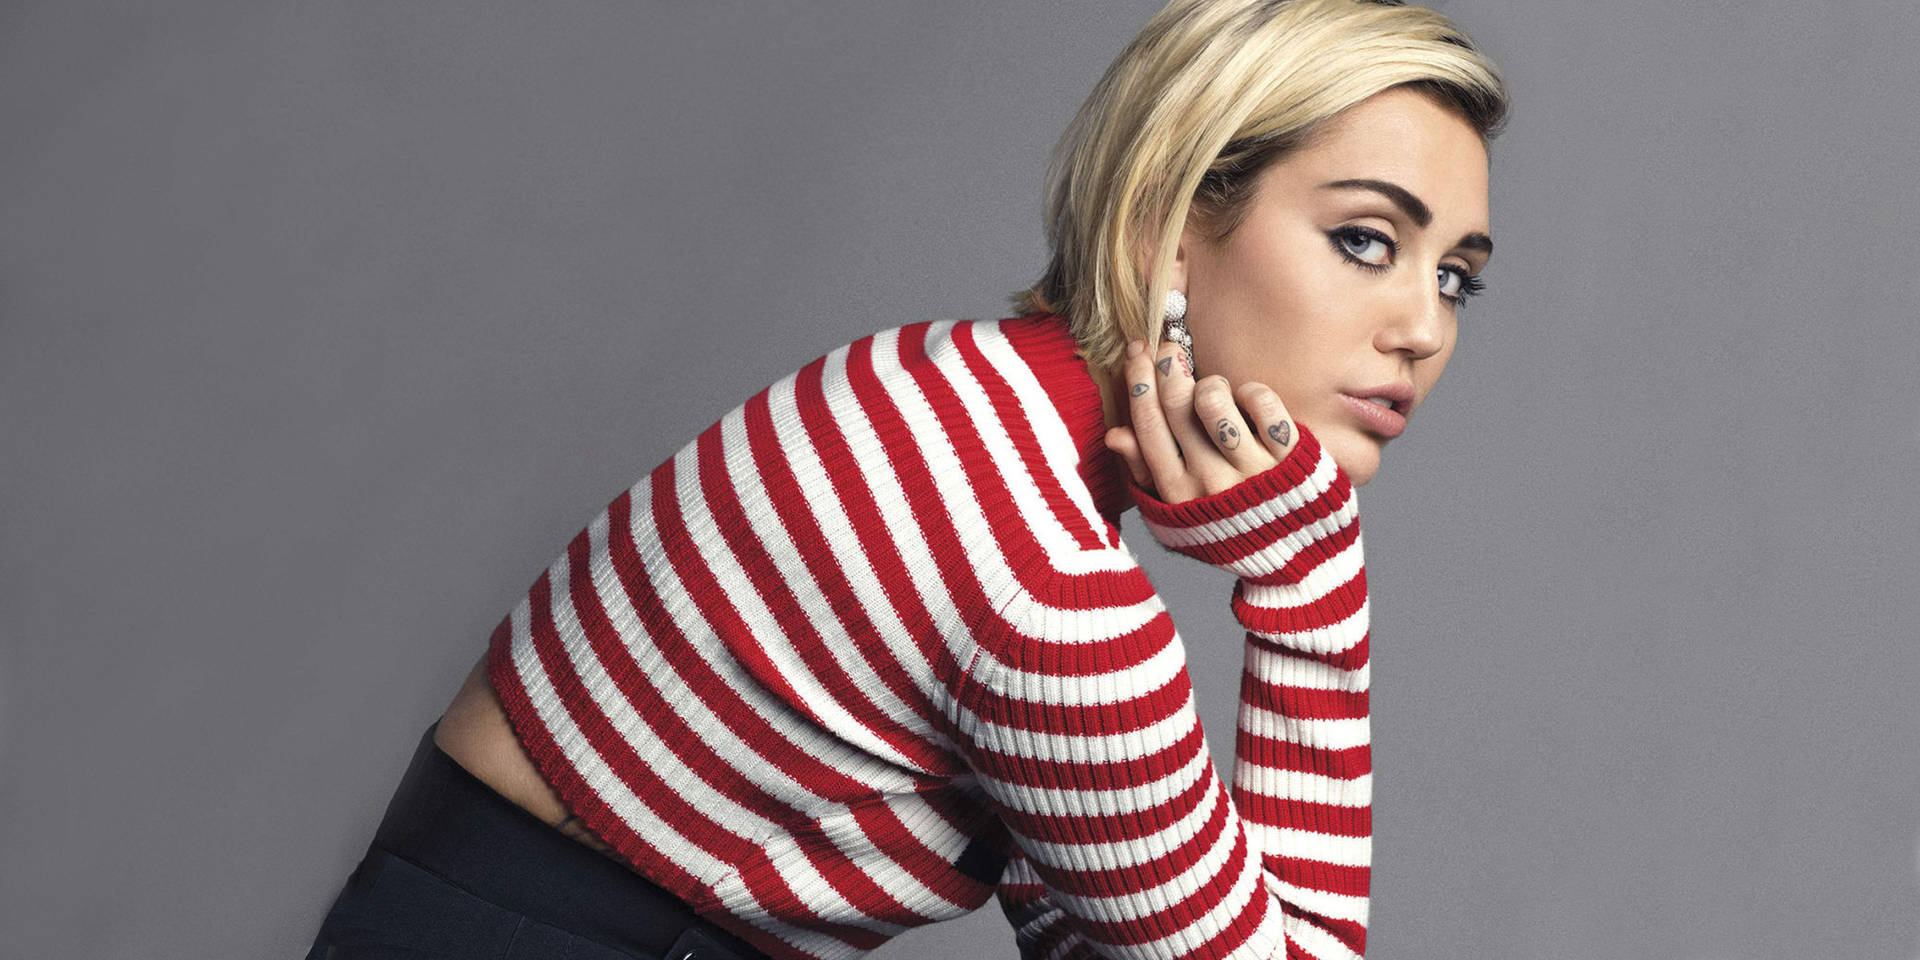 Gorgeous Miley Cyrus Side Profile